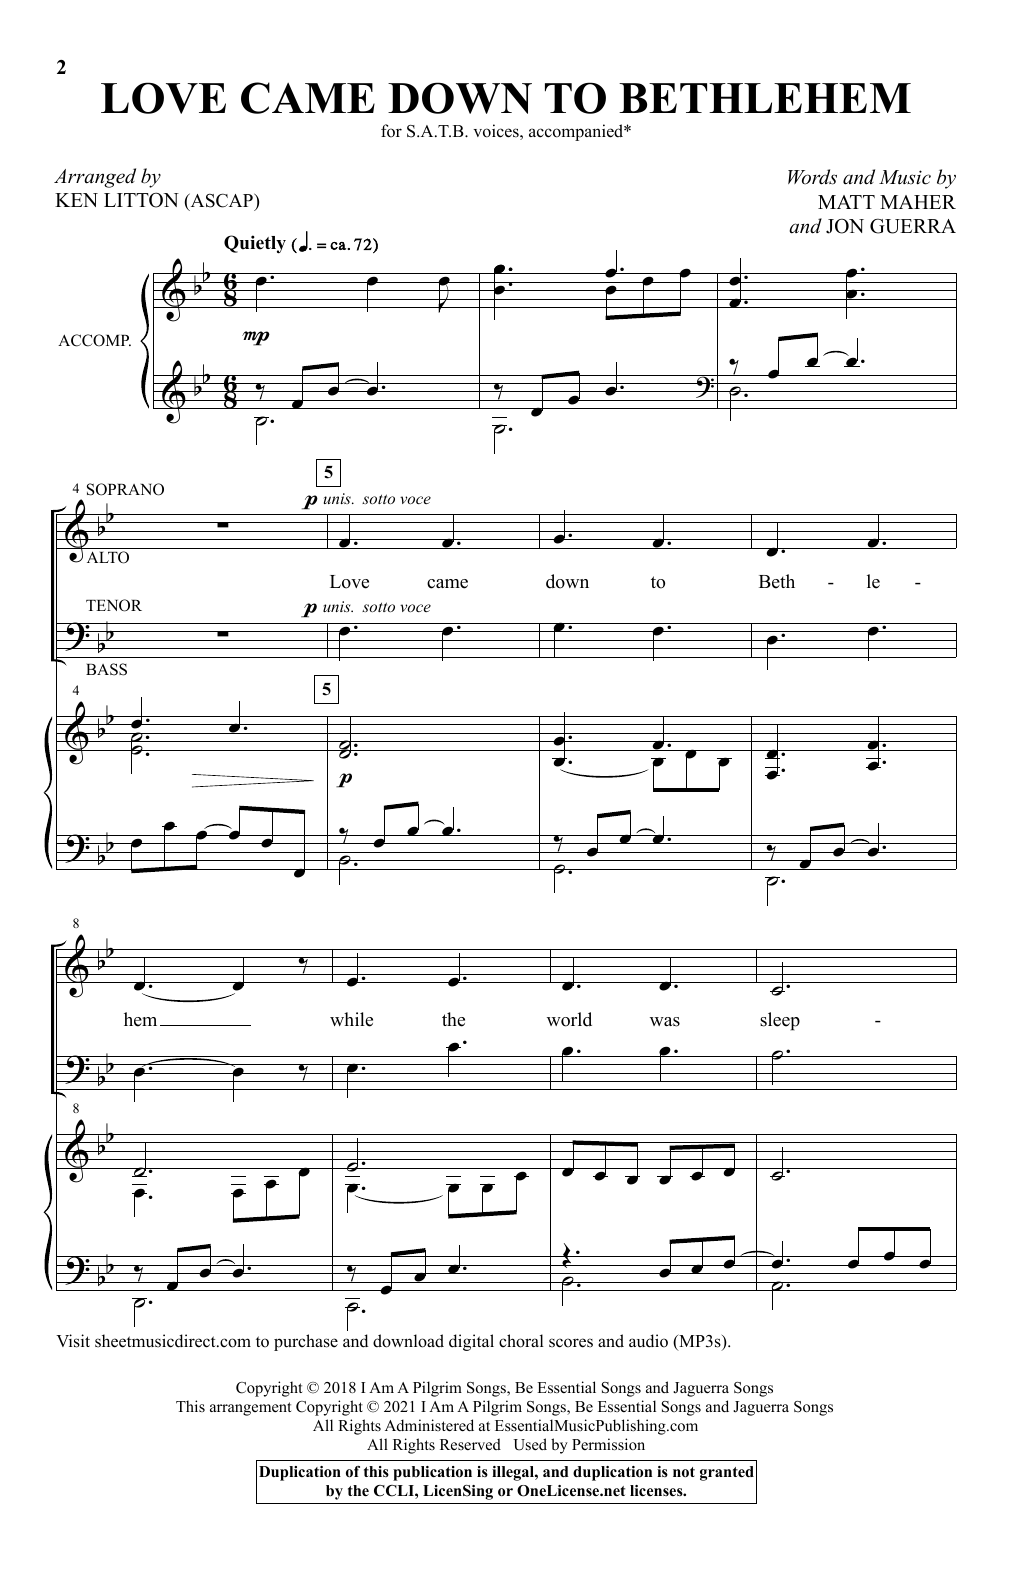 Matt Maher Love Came Down To Bethlehem (arr. Ken Litton) Sheet Music Notes & Chords for SATB Choir - Download or Print PDF